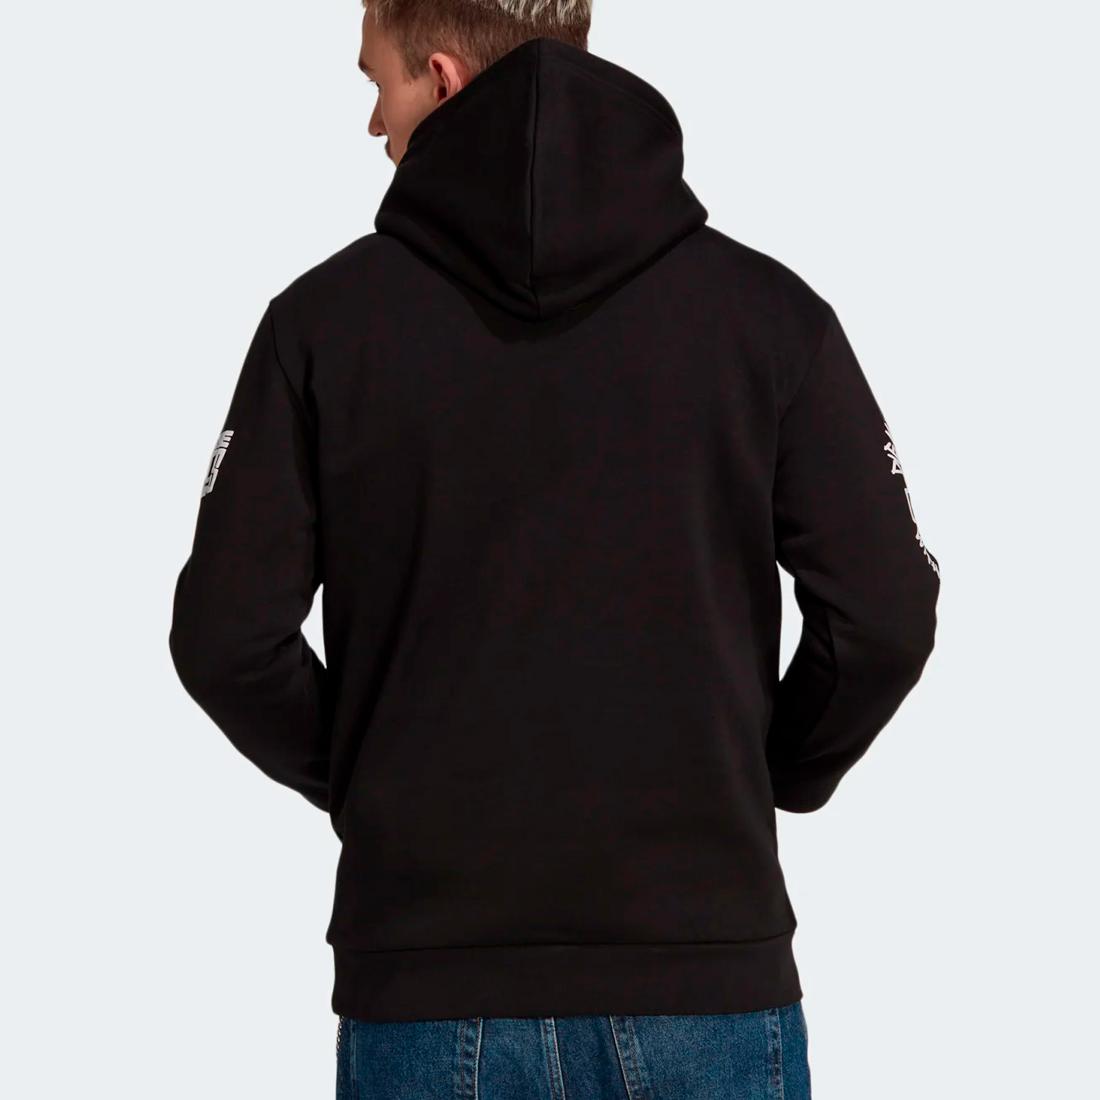 Adidas Unite hoodie black - Shop-Tetuan